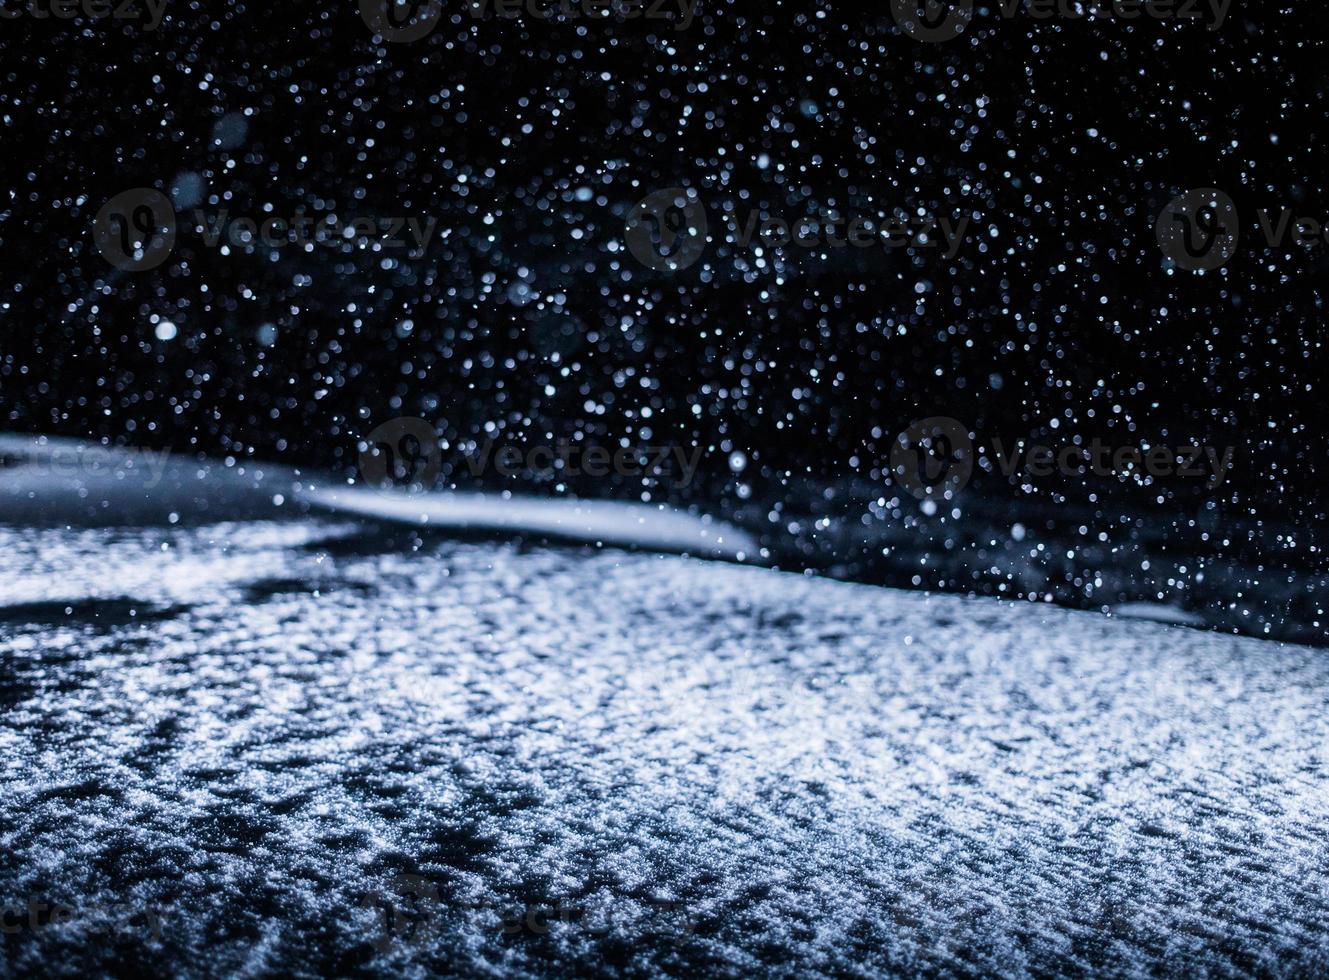 bakgrundsbelyst snöstruktur under snöstorm på natten foto